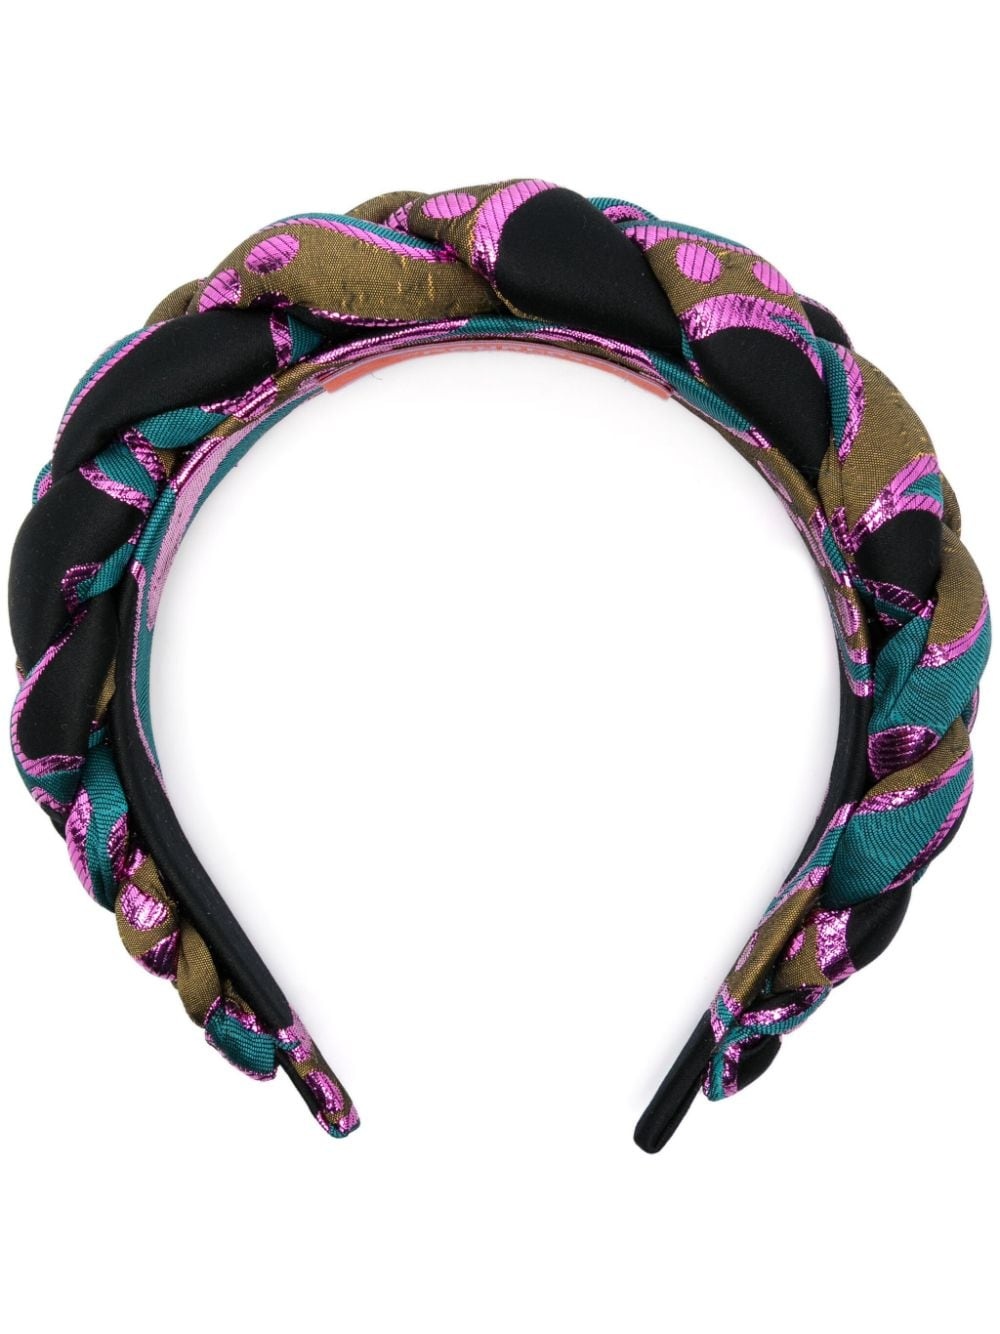 Rapunzel braided headband - 1